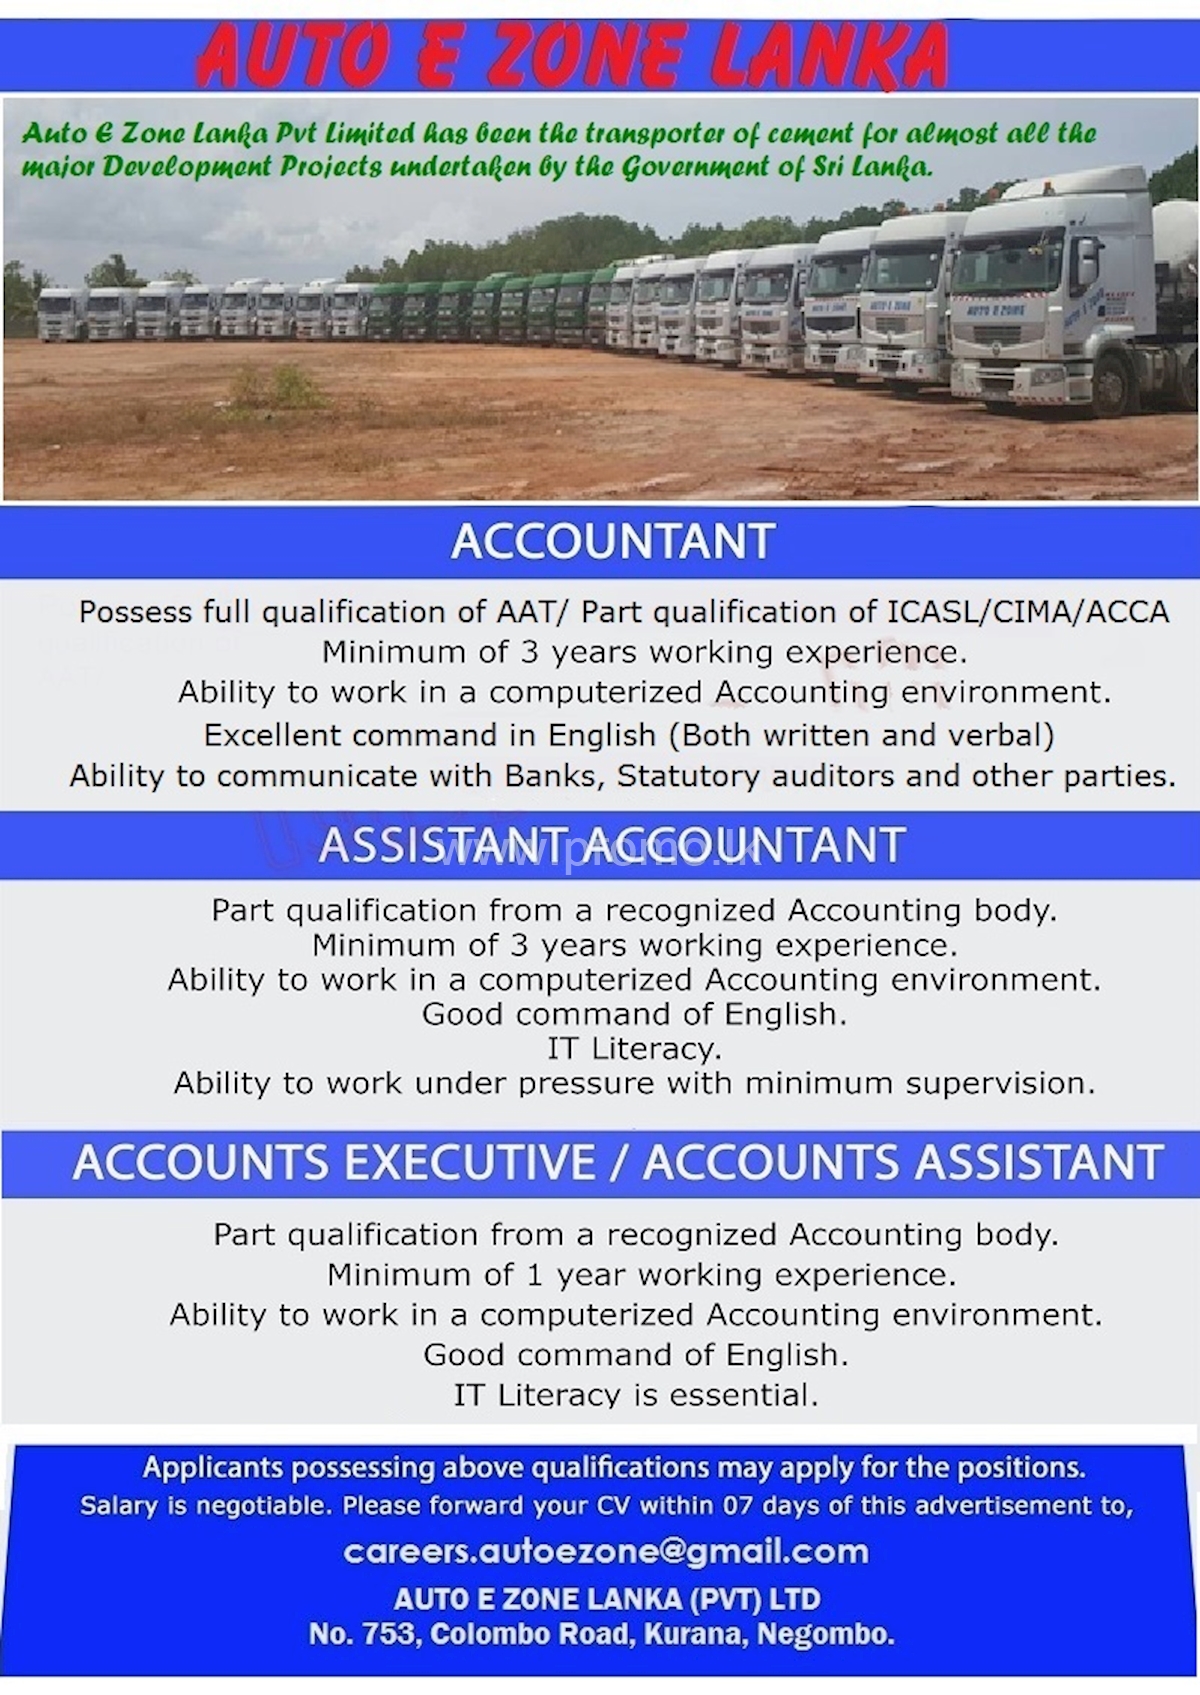 Accountant/Ass. Accountant/Account Executive